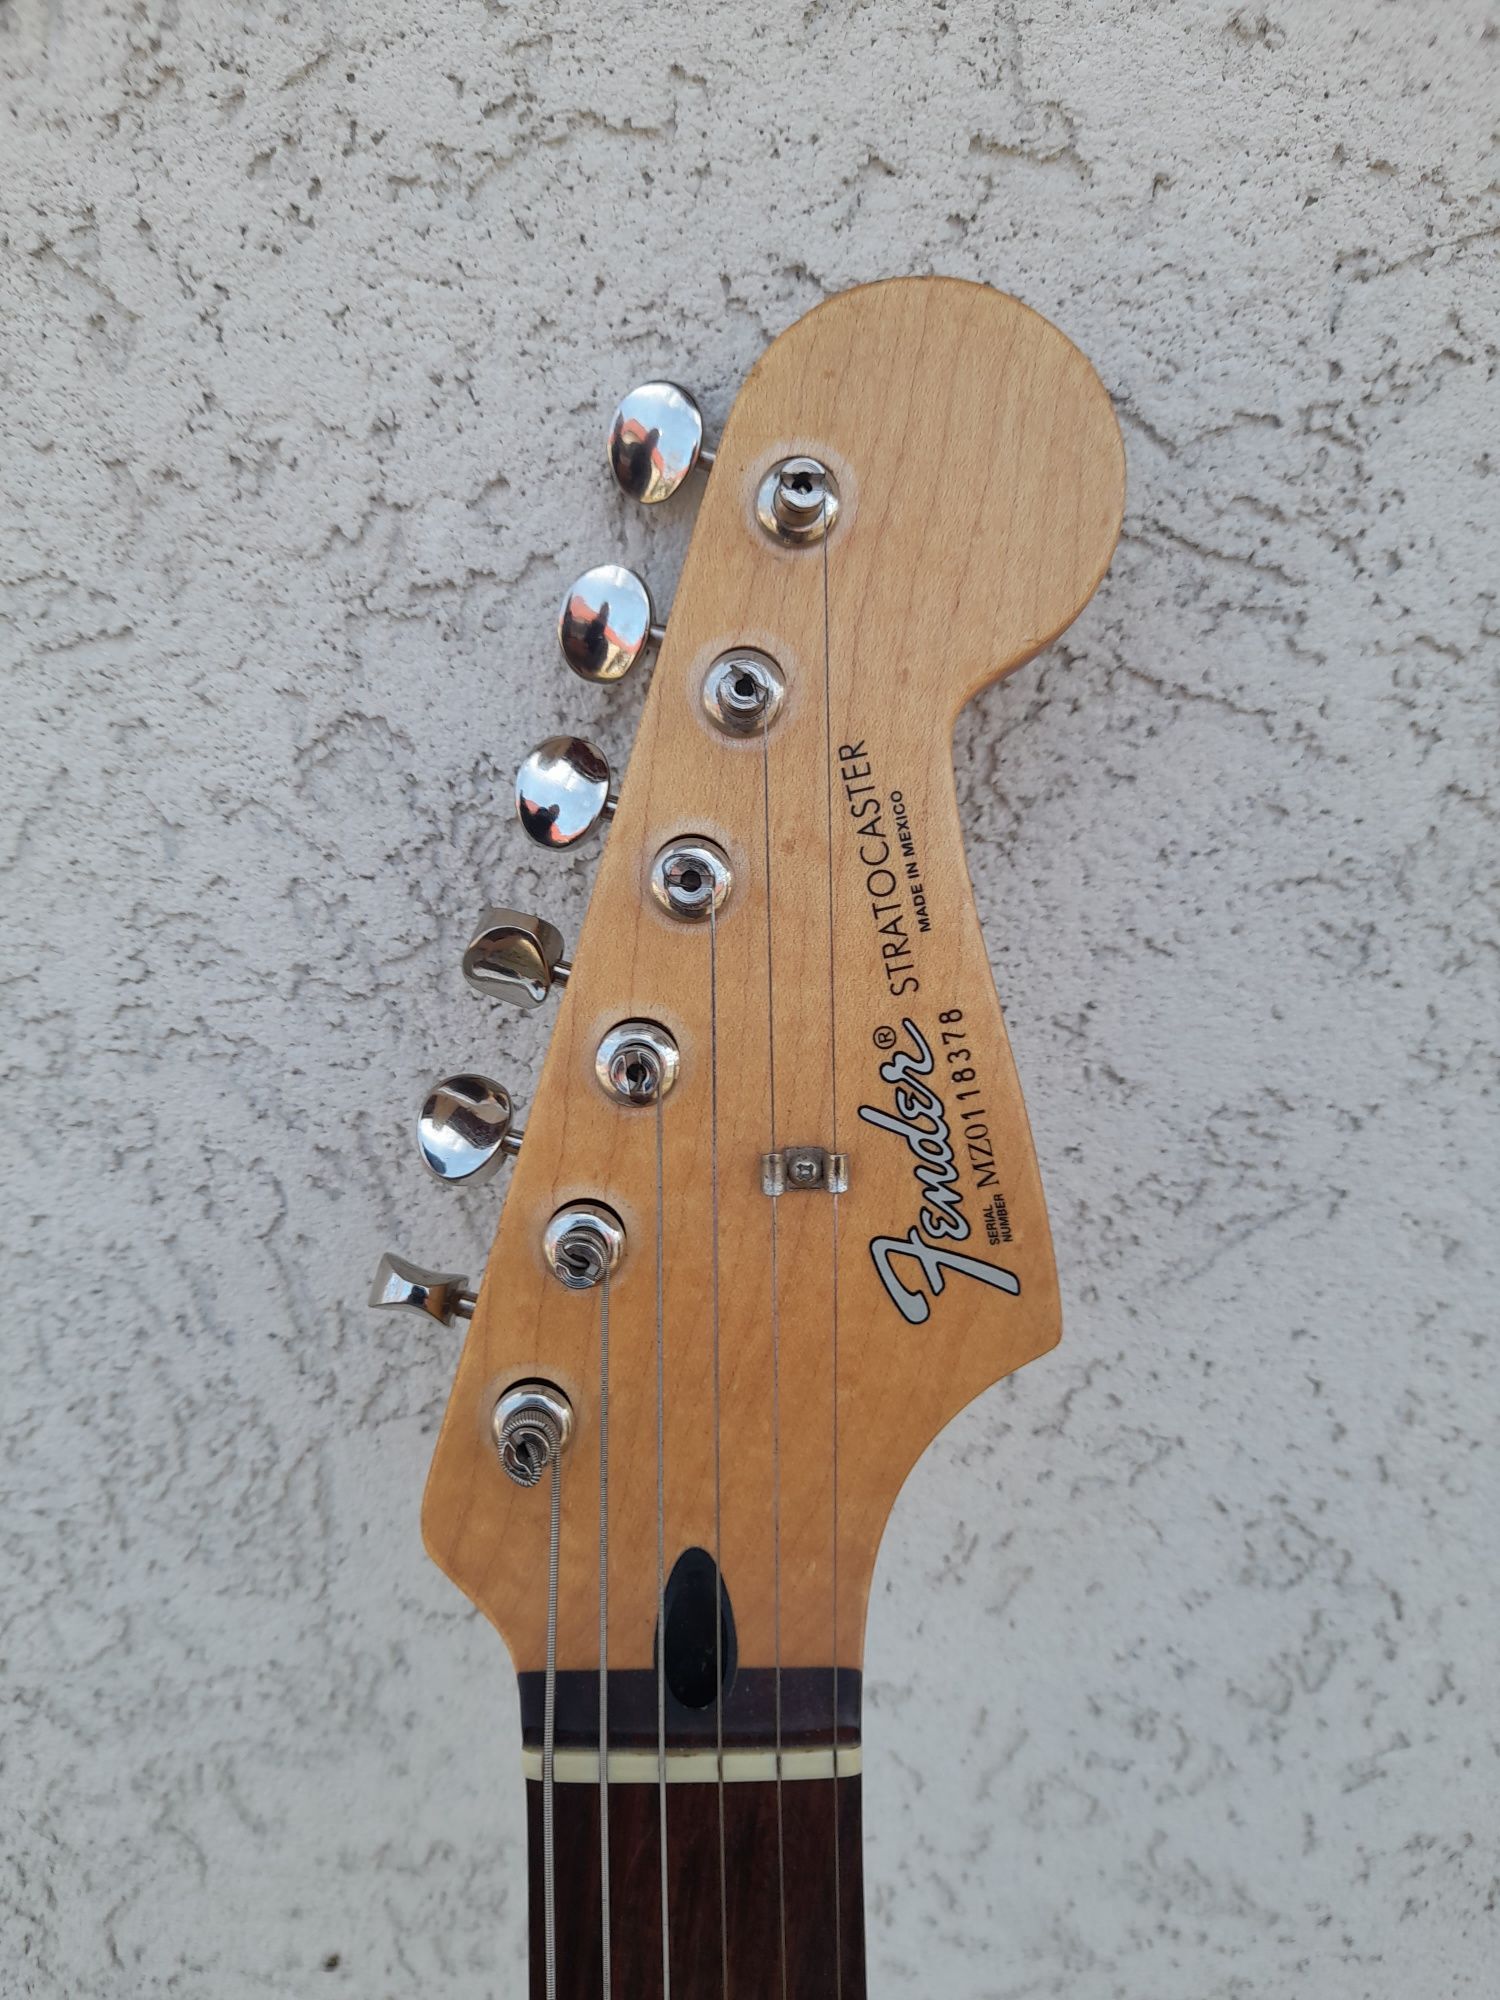 chitara electrica Fender Stratocaster